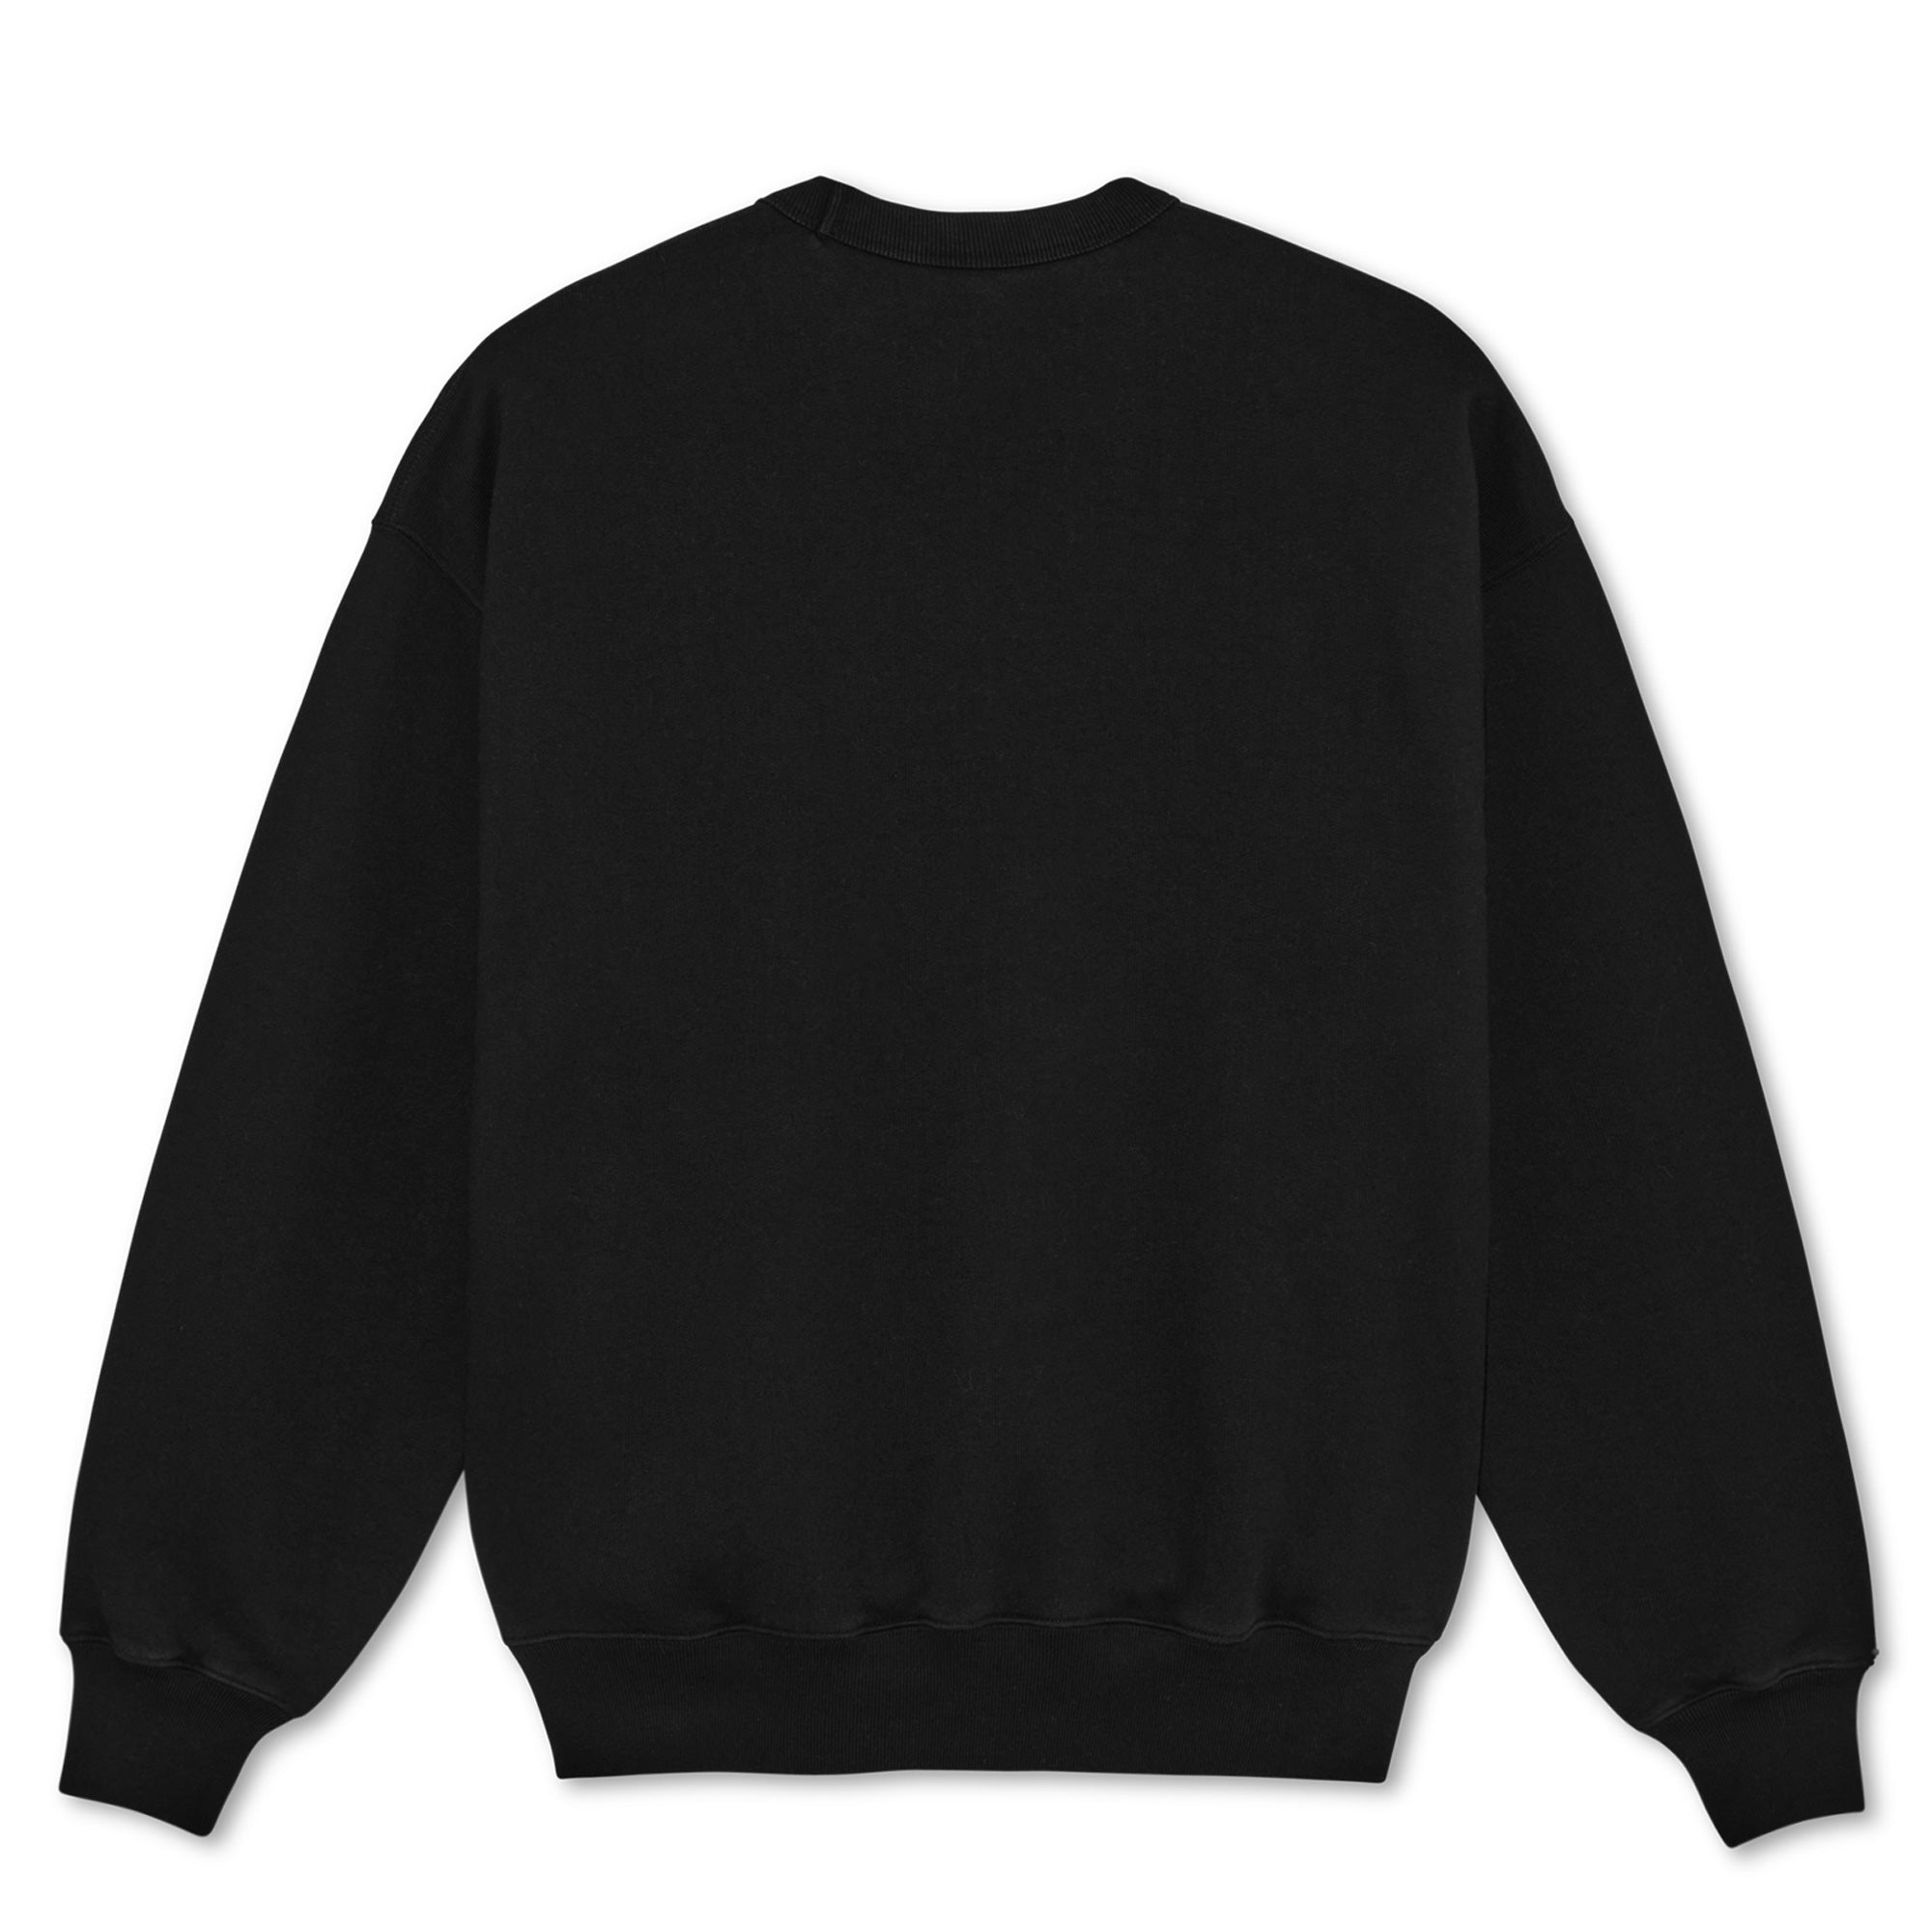 Polar Ed Crewneck Patch Sweatshirt - Black